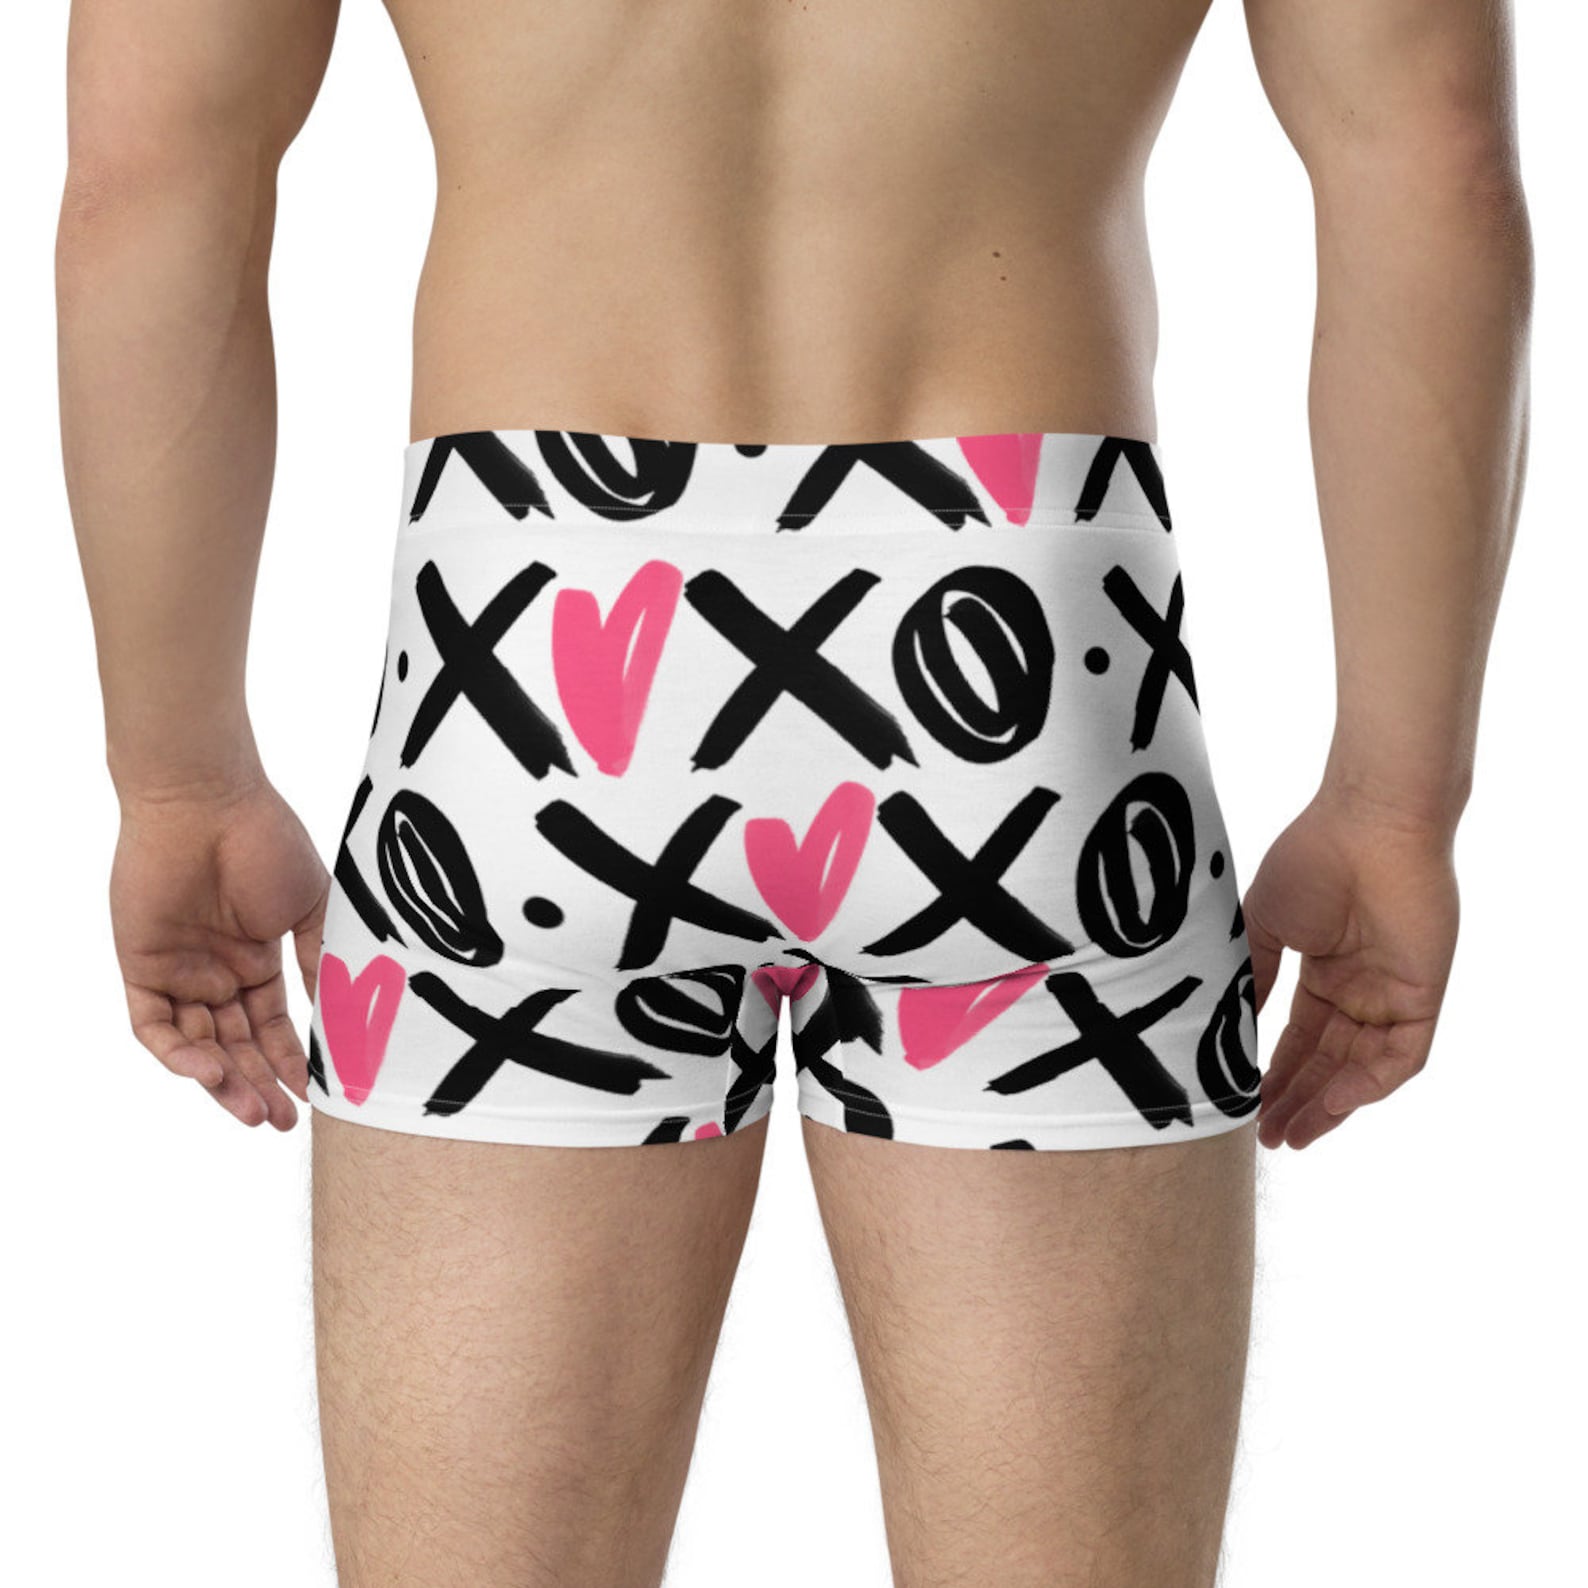 XOXO Kisses & Love Men's Boxer Briefs - Etsy